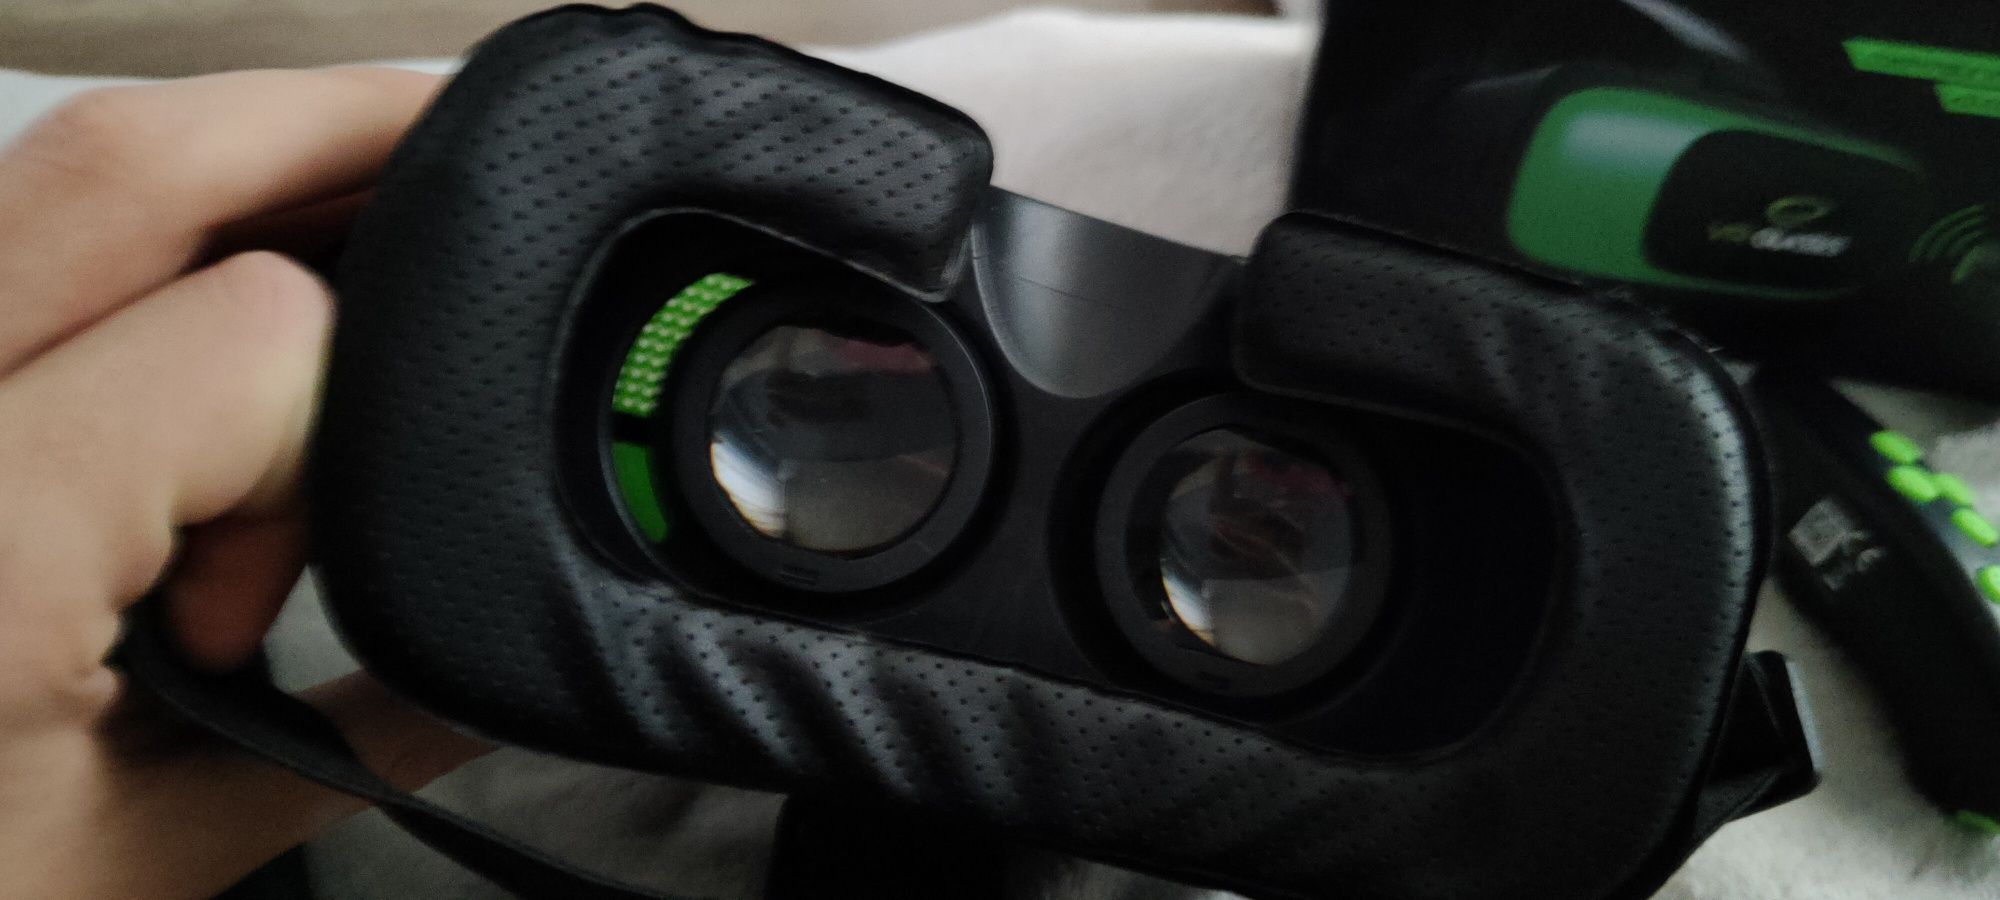 okulary 3D VR dla smartfonów 3.5"-6" Z kontrolerem bluetooth